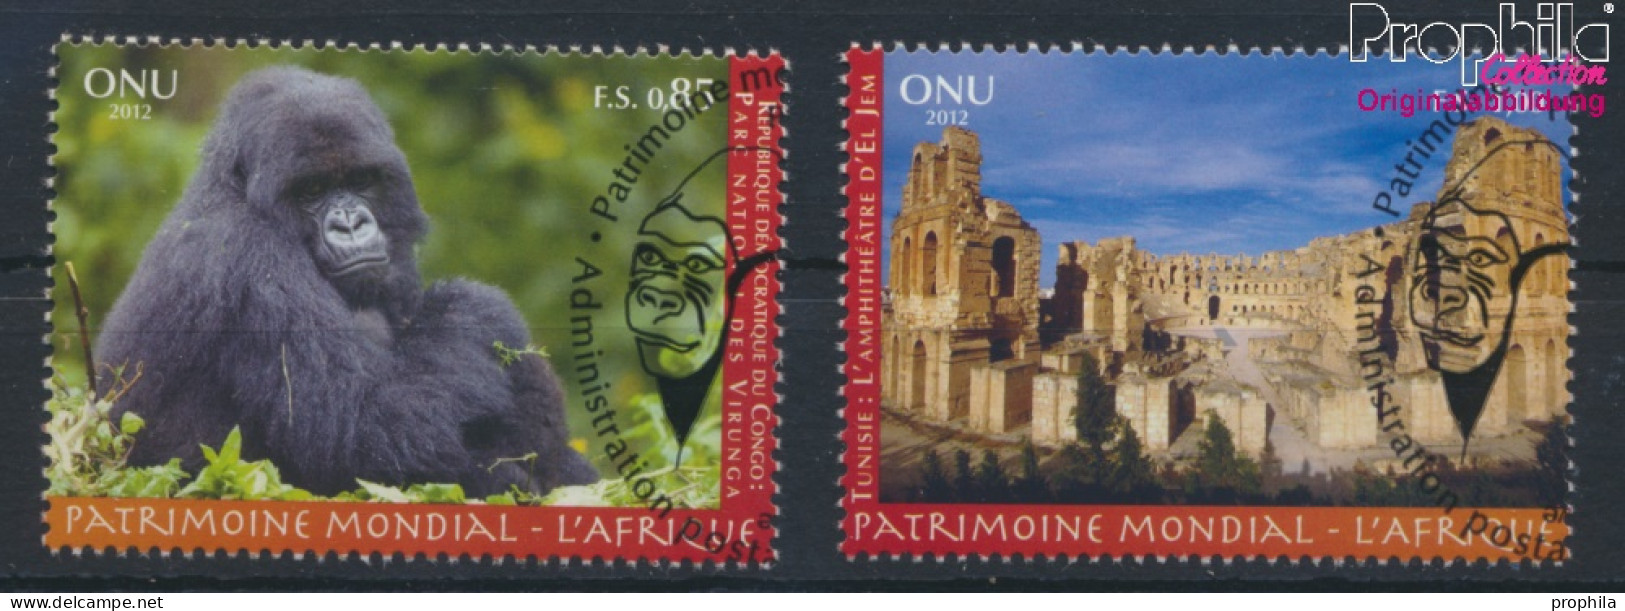 UNO - Genf 797-798 (kompl.Ausg.) Gestempelt 2012 UNESCO Welterbe Afrika (10073554 - Used Stamps